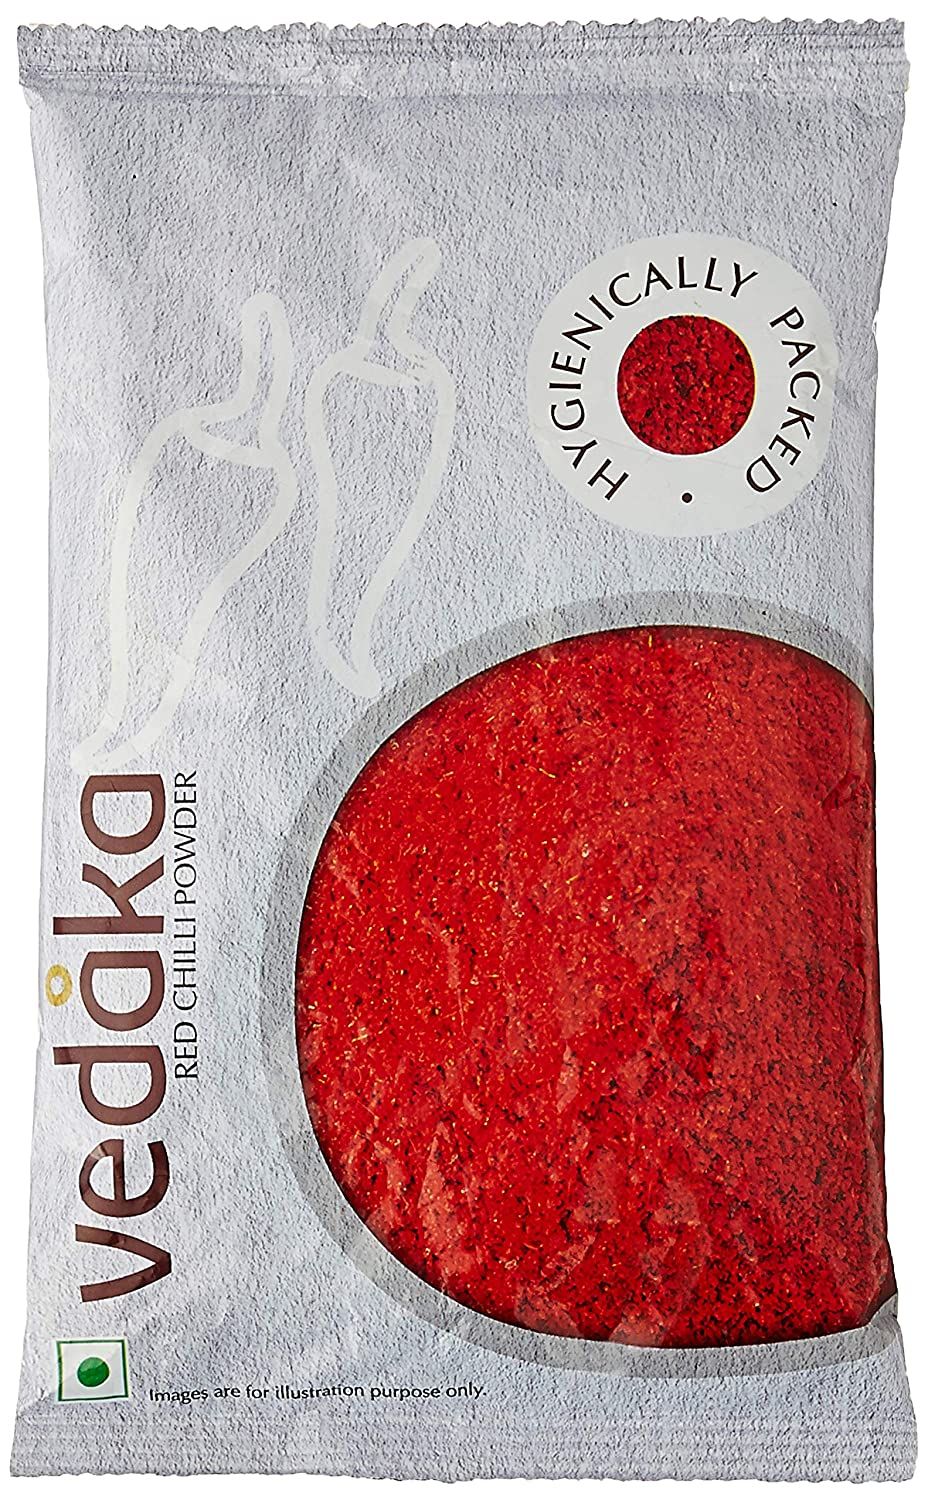 Vedaka Red Chilli Powder (Lal Mirch) Image